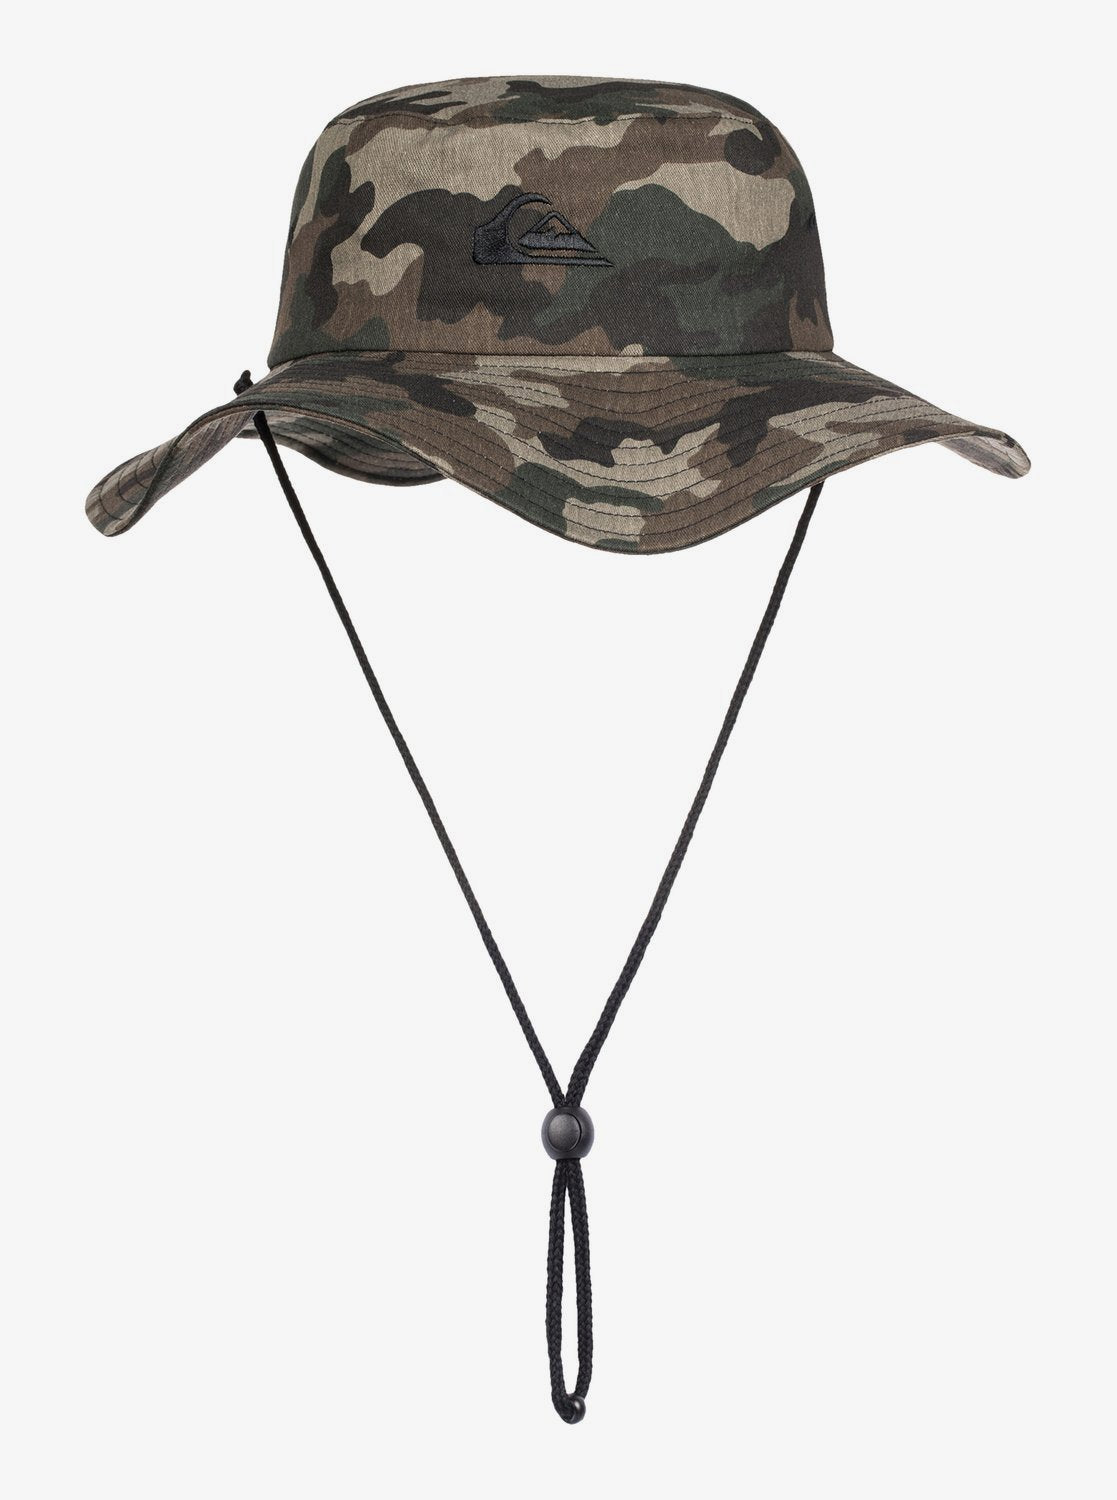 Quiksilver Bushmaster Bucket Hat L/XL